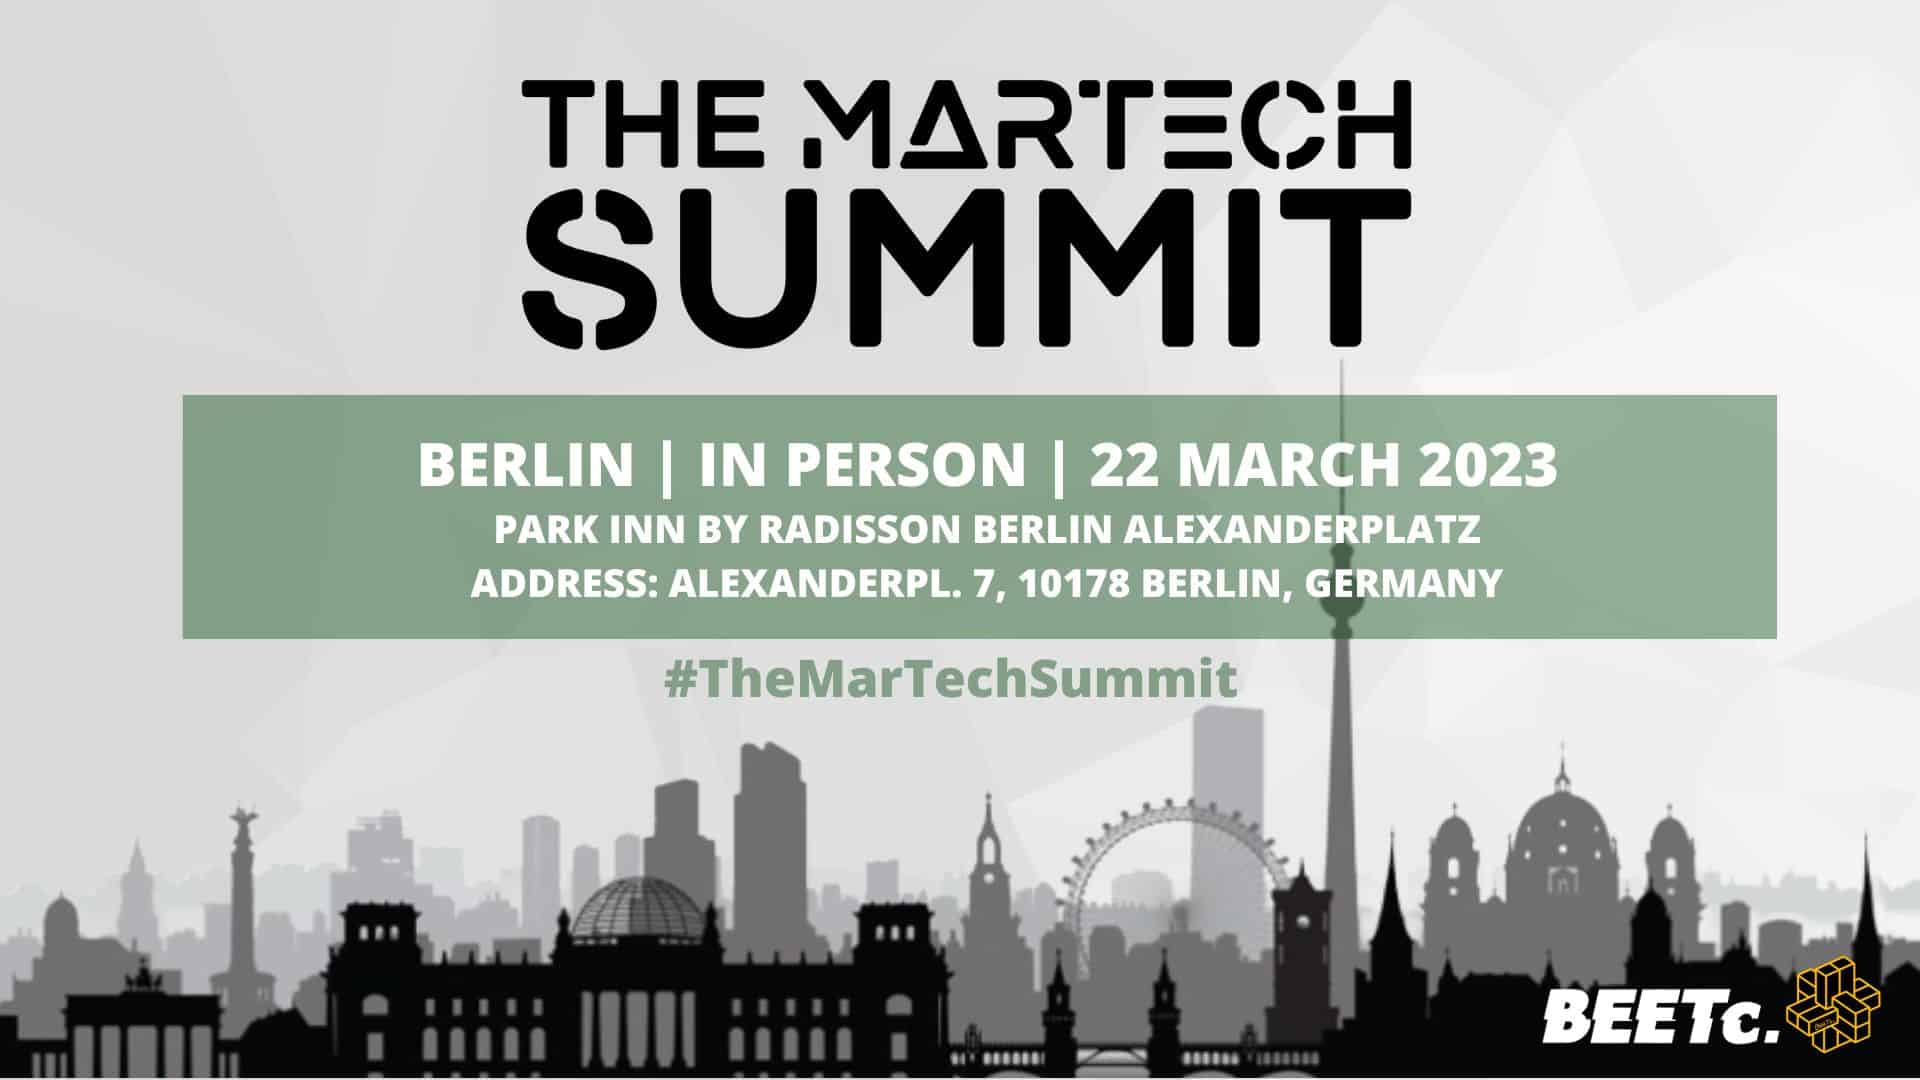 The Martech Summit Berlin